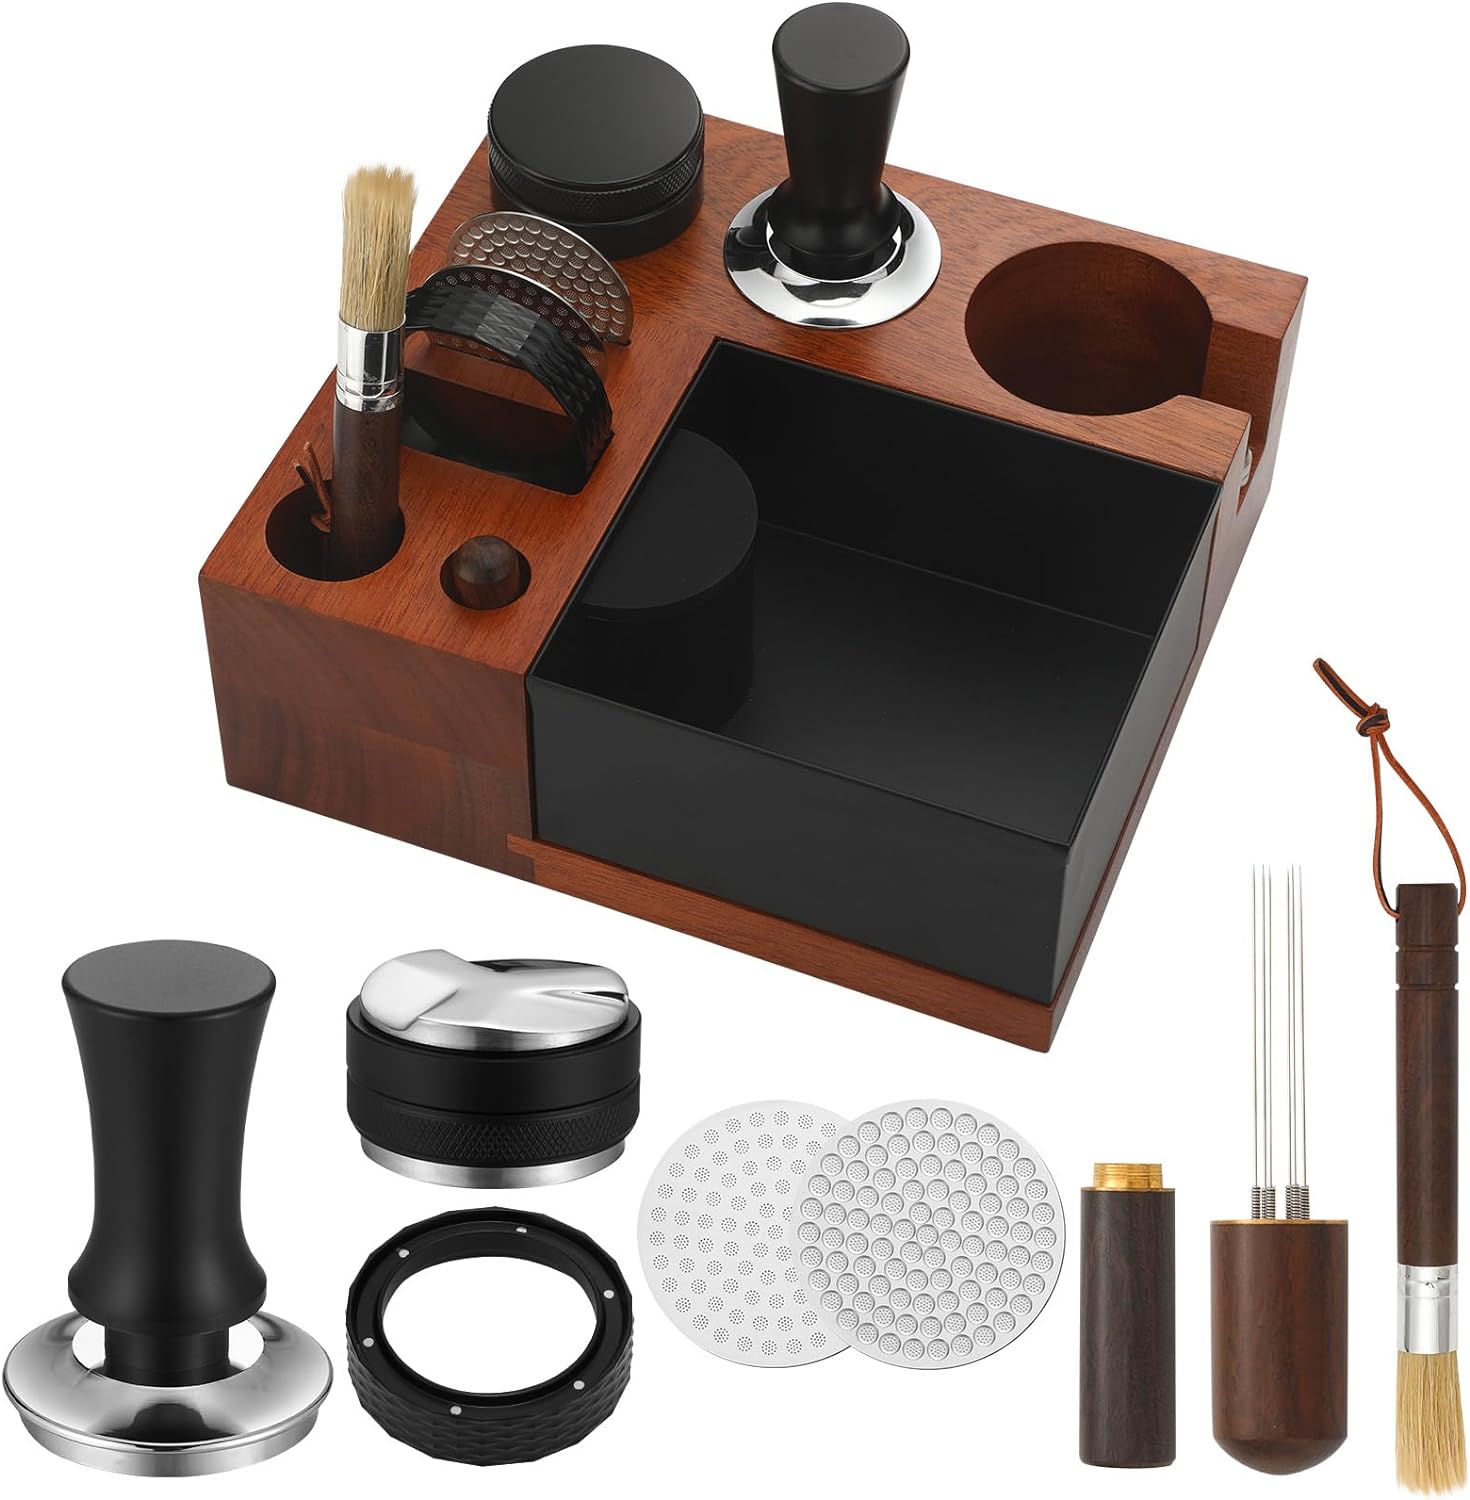 Wenqik 8 In One Espresso Knock Box Espresso Accessories Coffee Organizer, Include Wooden Tamping Station Espresso Tamper, Distributor, Puck Screen Accessories (58 mm)